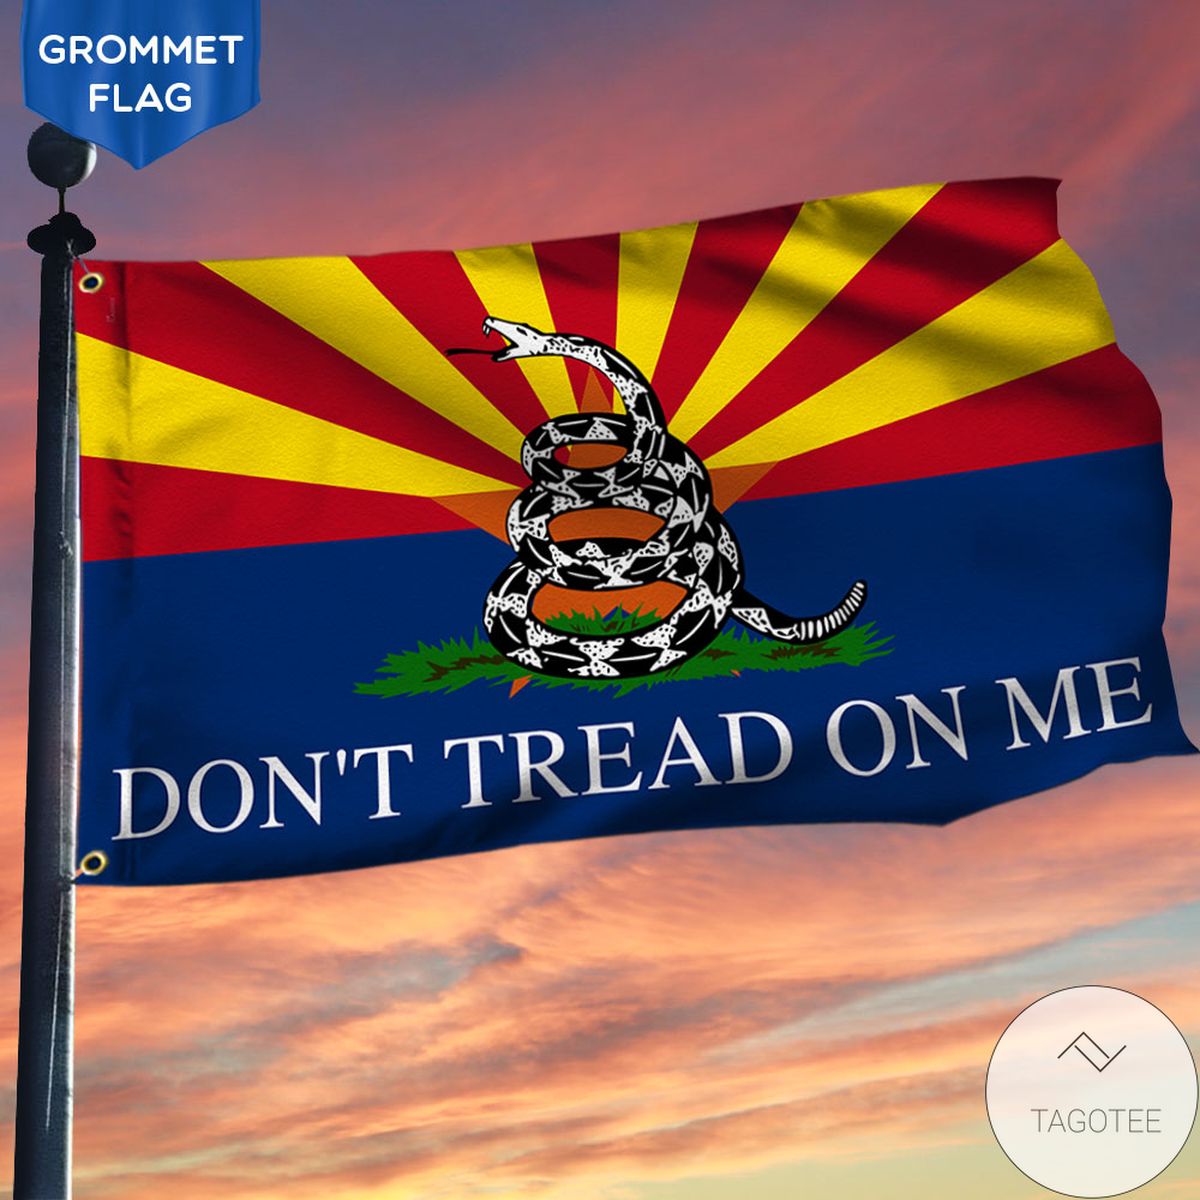 Arizona Grommet Flag Gadsden Don't Tread On Me Flag